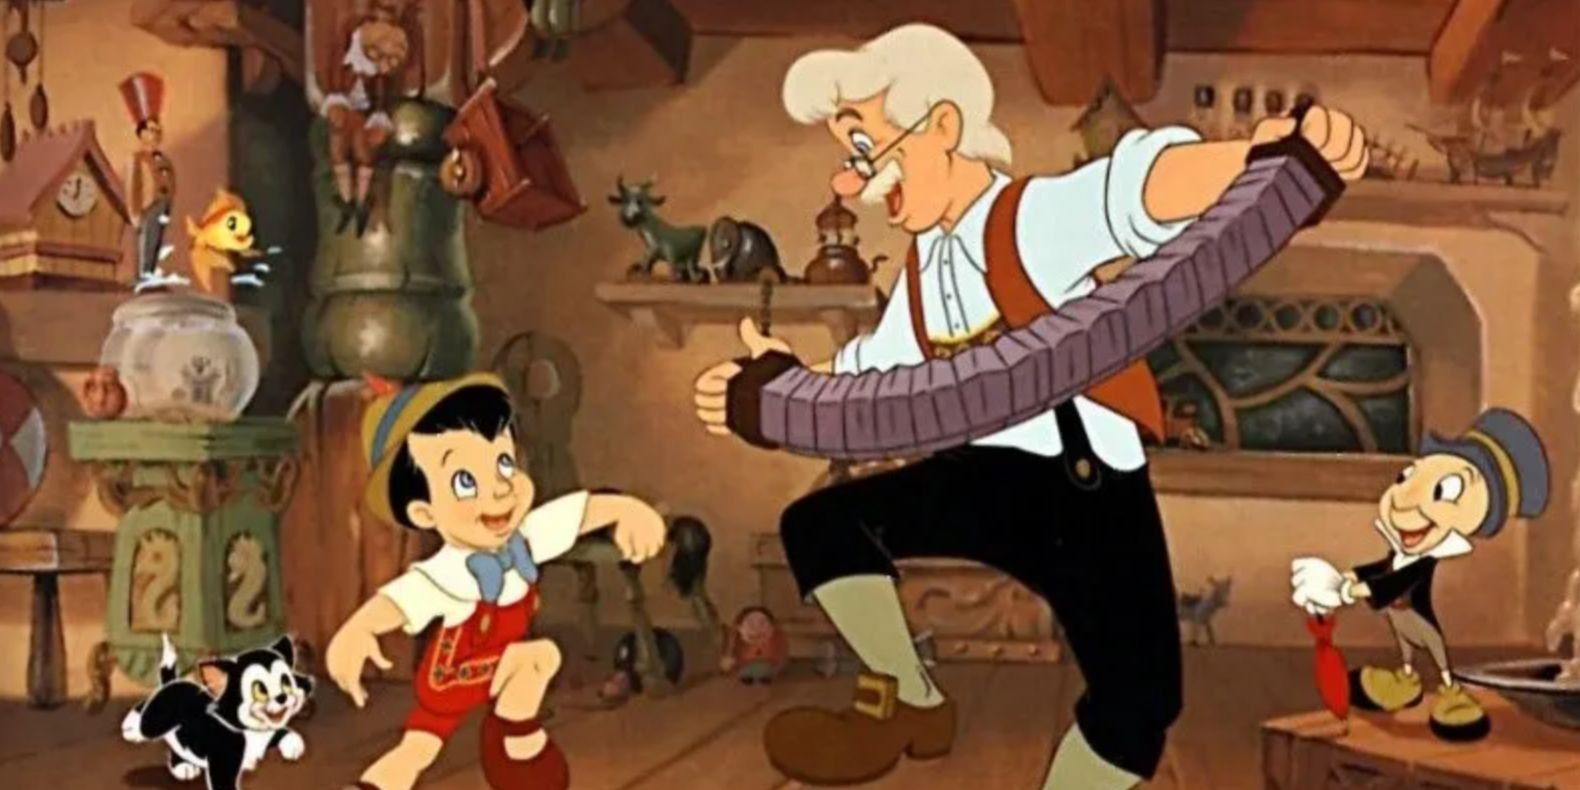 Pinocchio dancing to music.